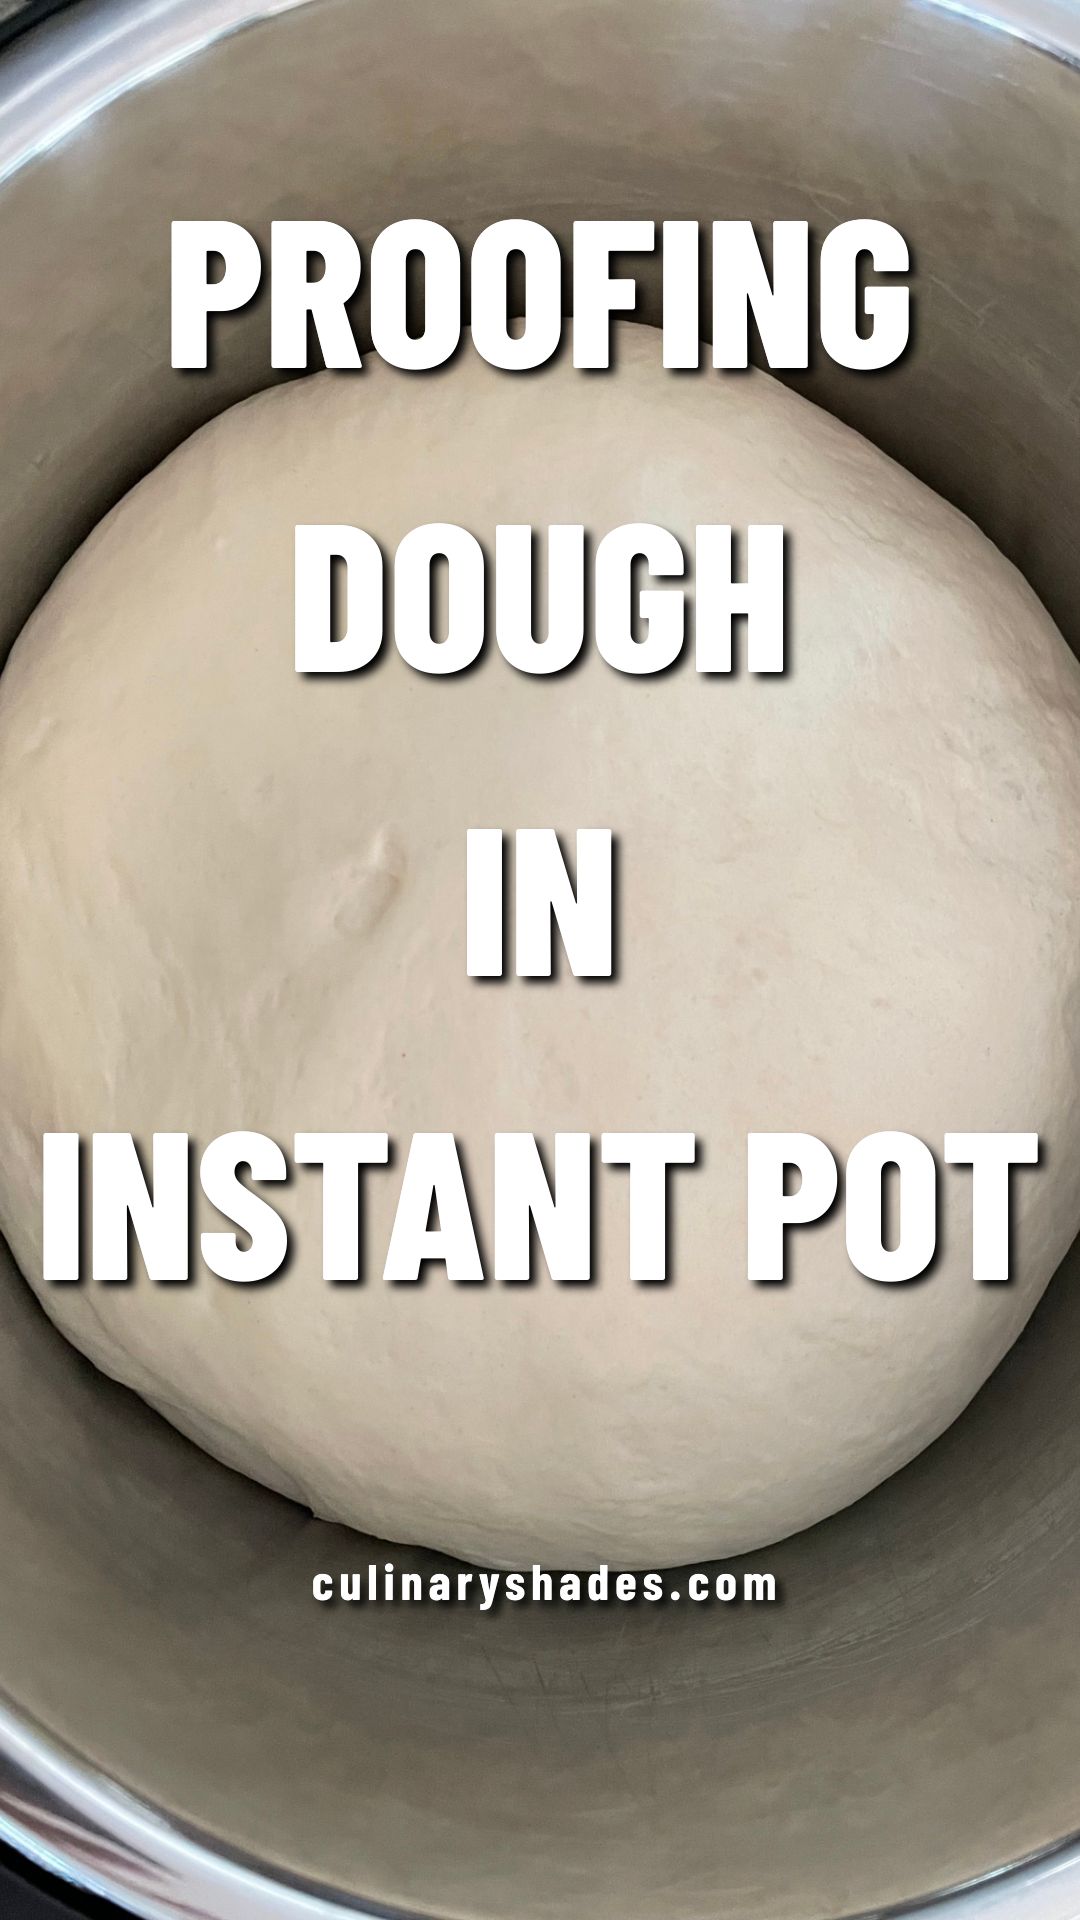 proofing dough in instant pot.